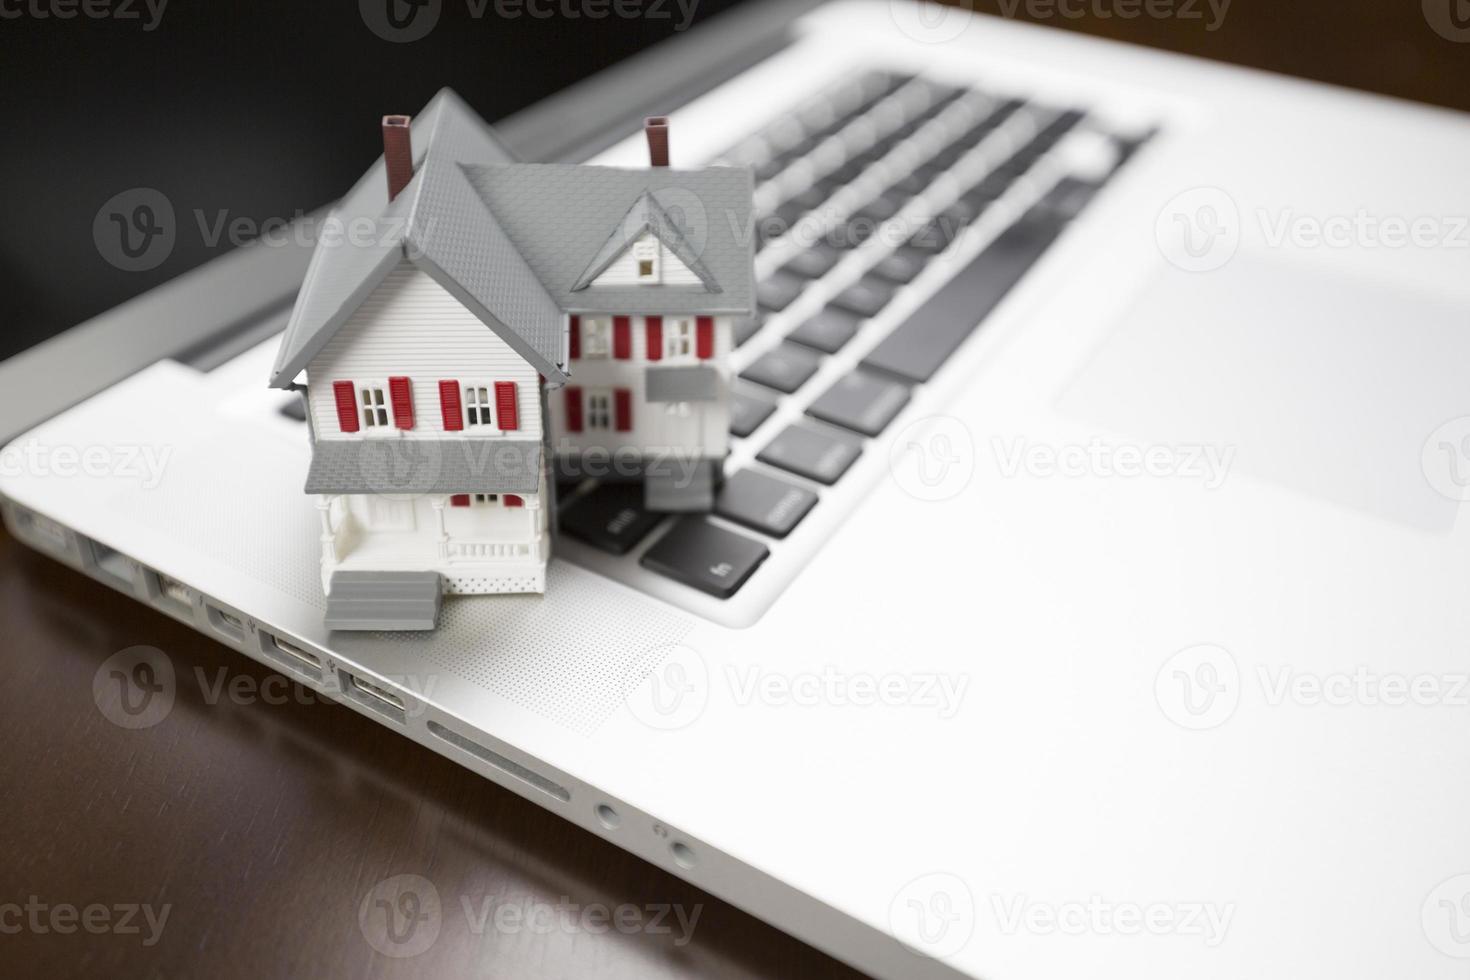 Miniature House on Laptop Computer photo